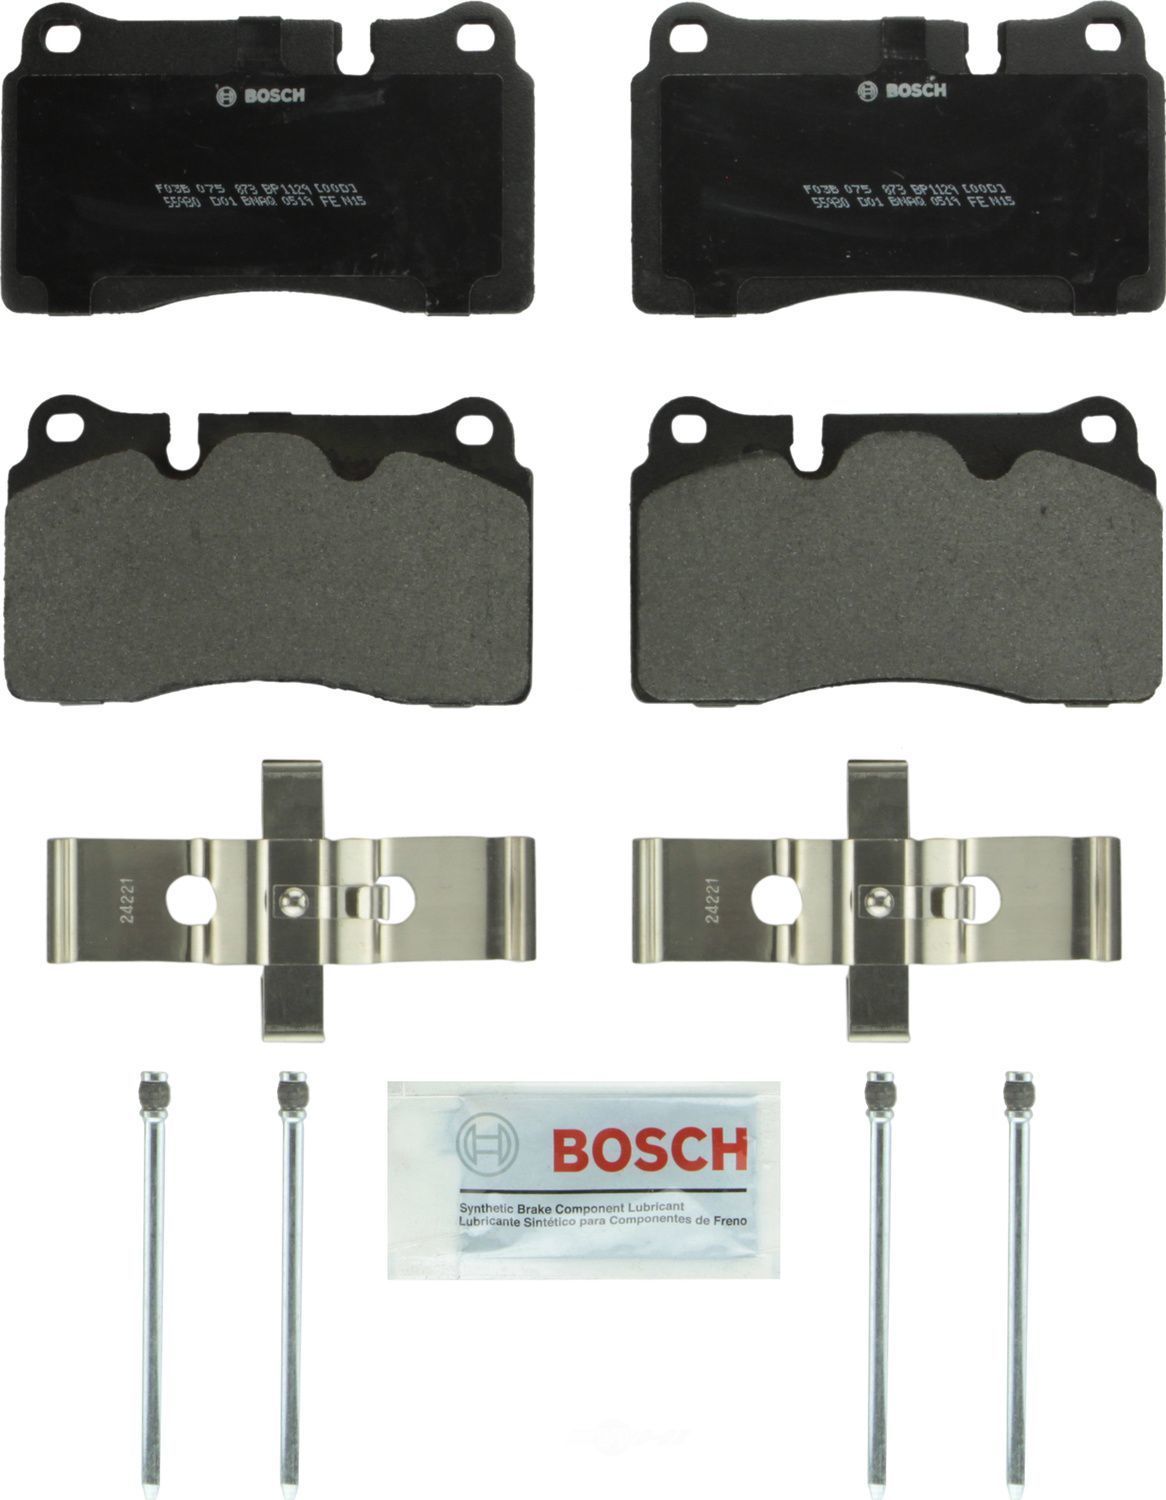 BOSCH BRAKE - Bosch QuietCast Semi-Metallic Brake Pads (Rear) - BQC BP1129